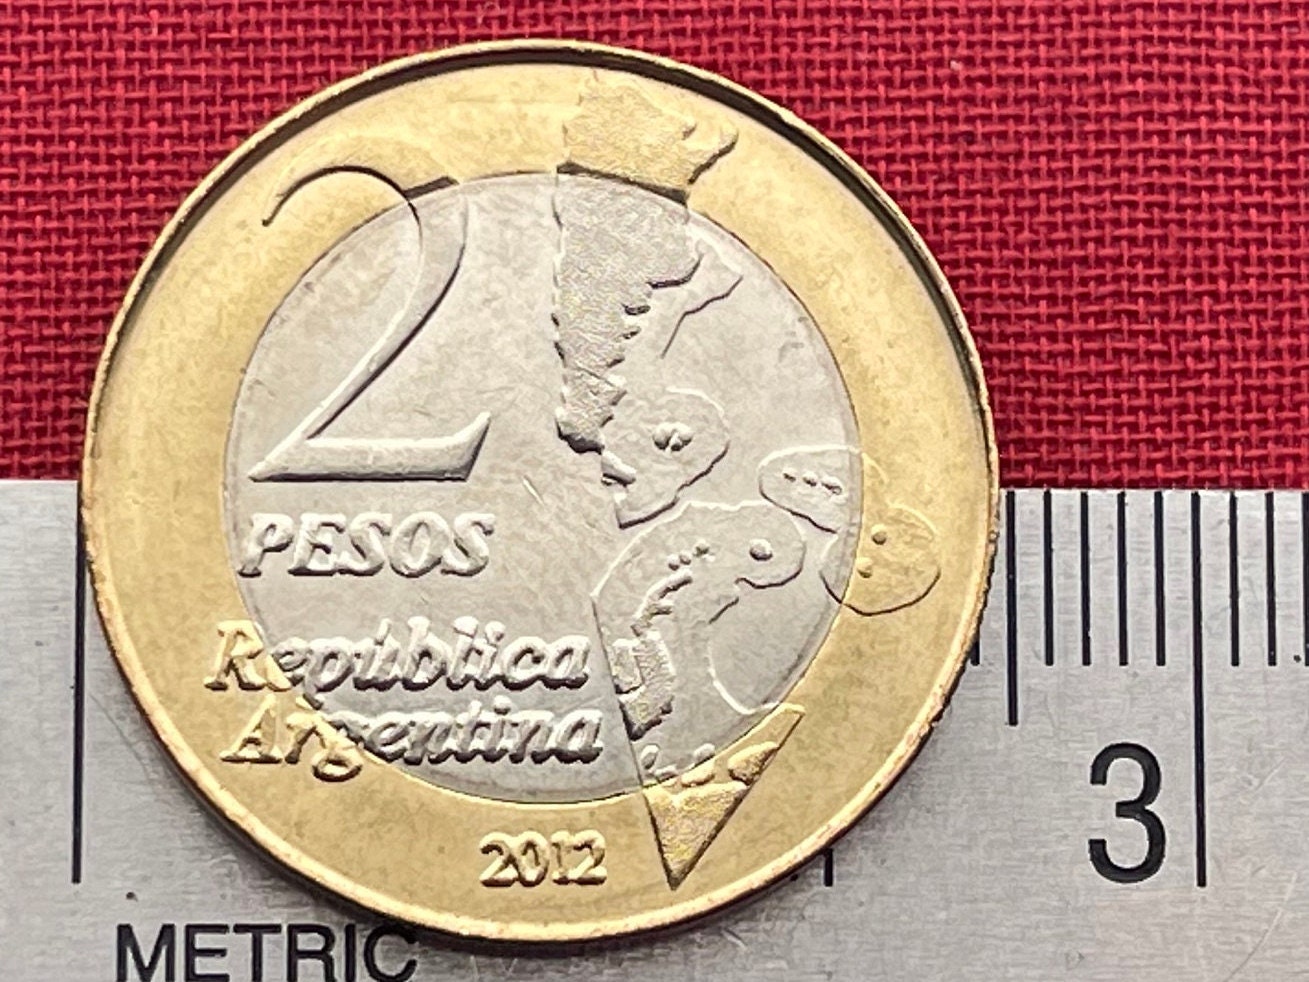 Territorial Claim to Islas Malvinas (Falkland Islands) 2 Pesos Argentina Authentic Coin Money for Jewelry (South Atlantic War) (Bimetallic)